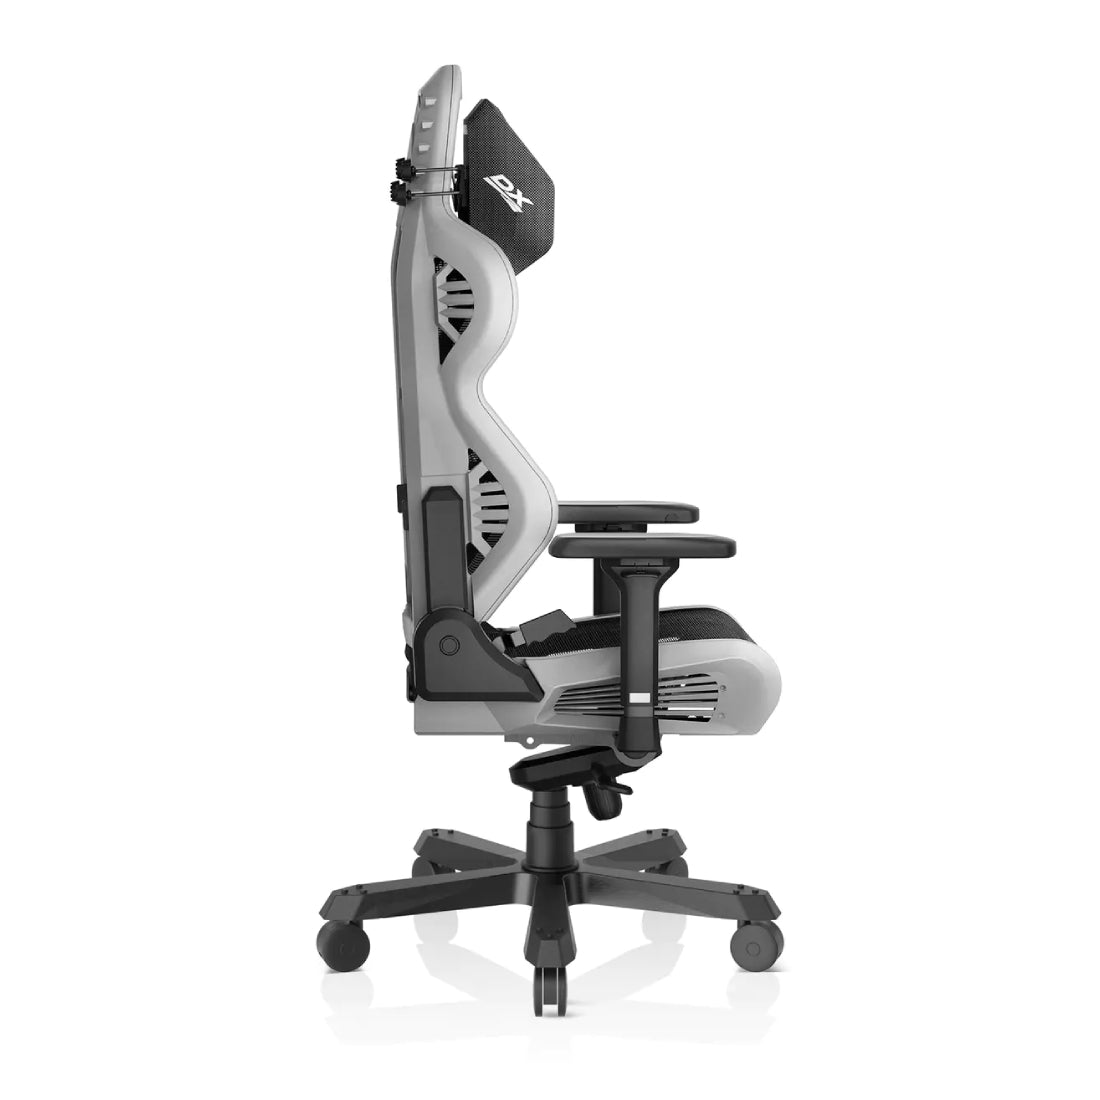 DXRacer AIR Plus Series Gaming Chair  - Grey & Black - Store 974 | ستور ٩٧٤